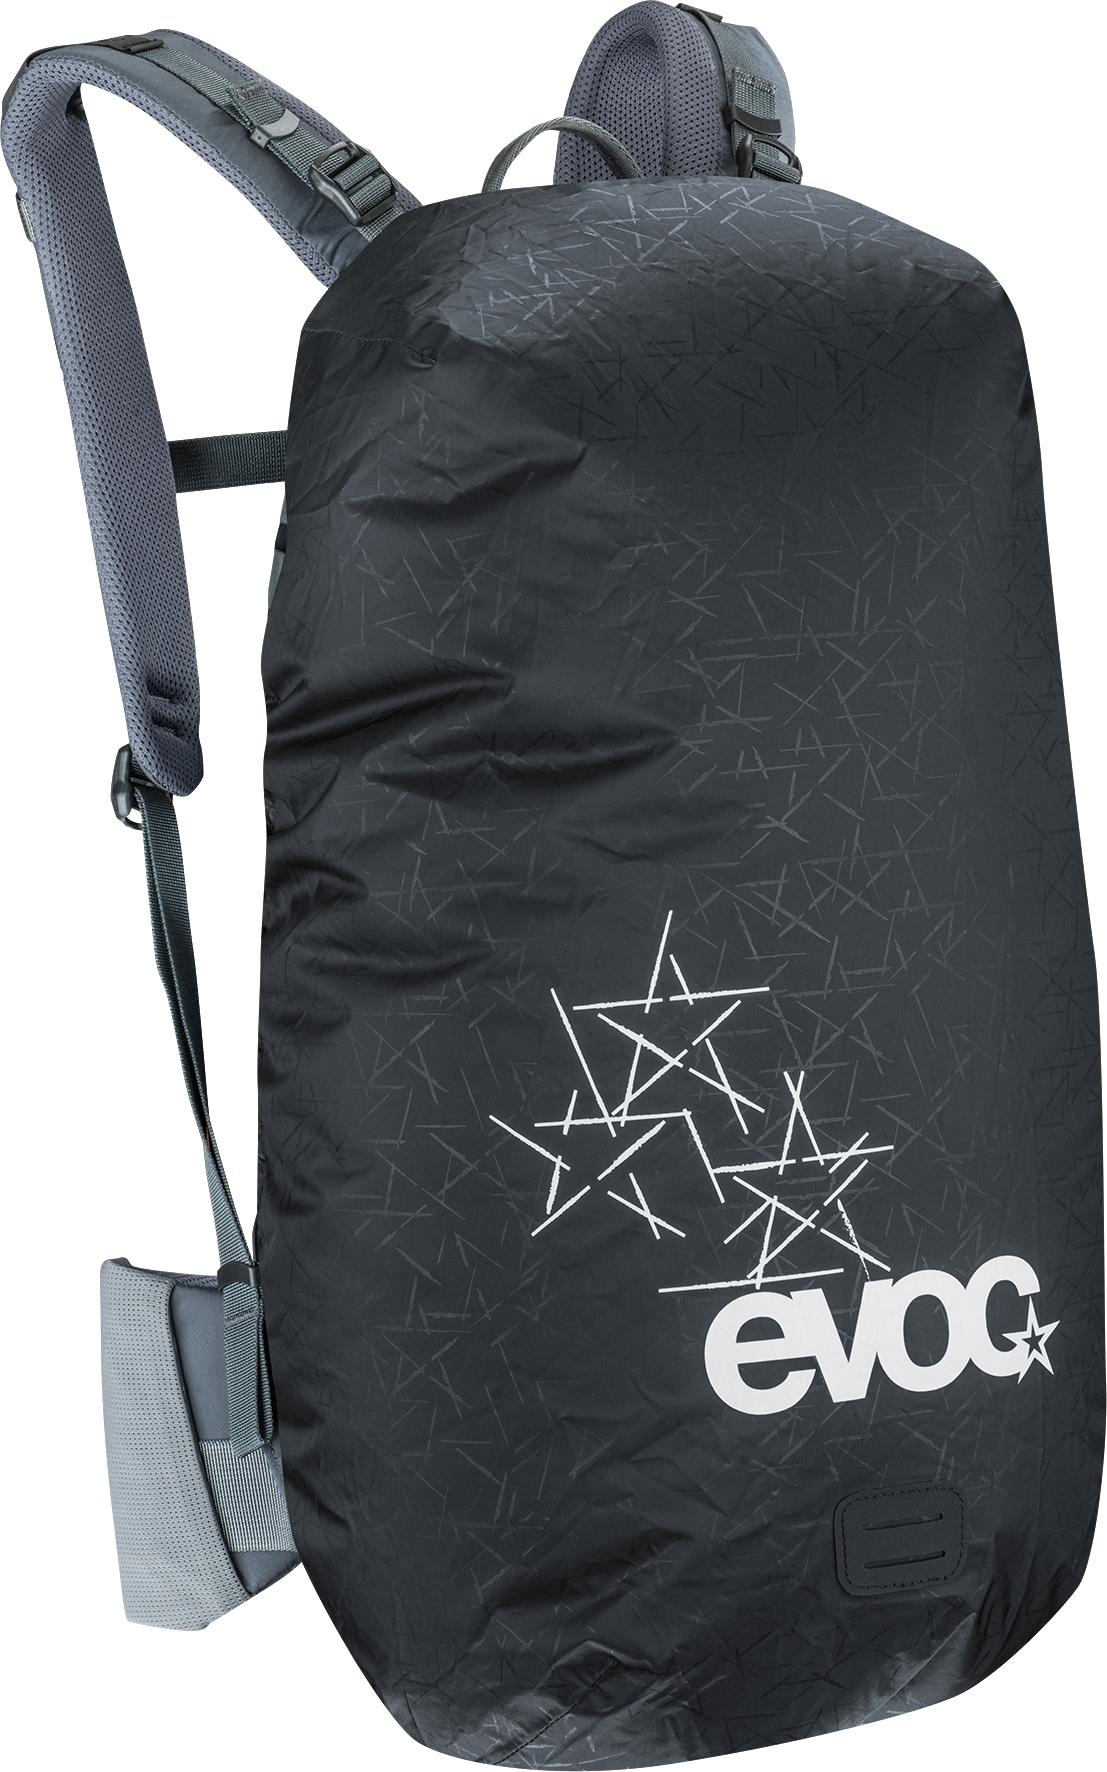 Evoc Raincover Backpack Sleeve - Large - Black